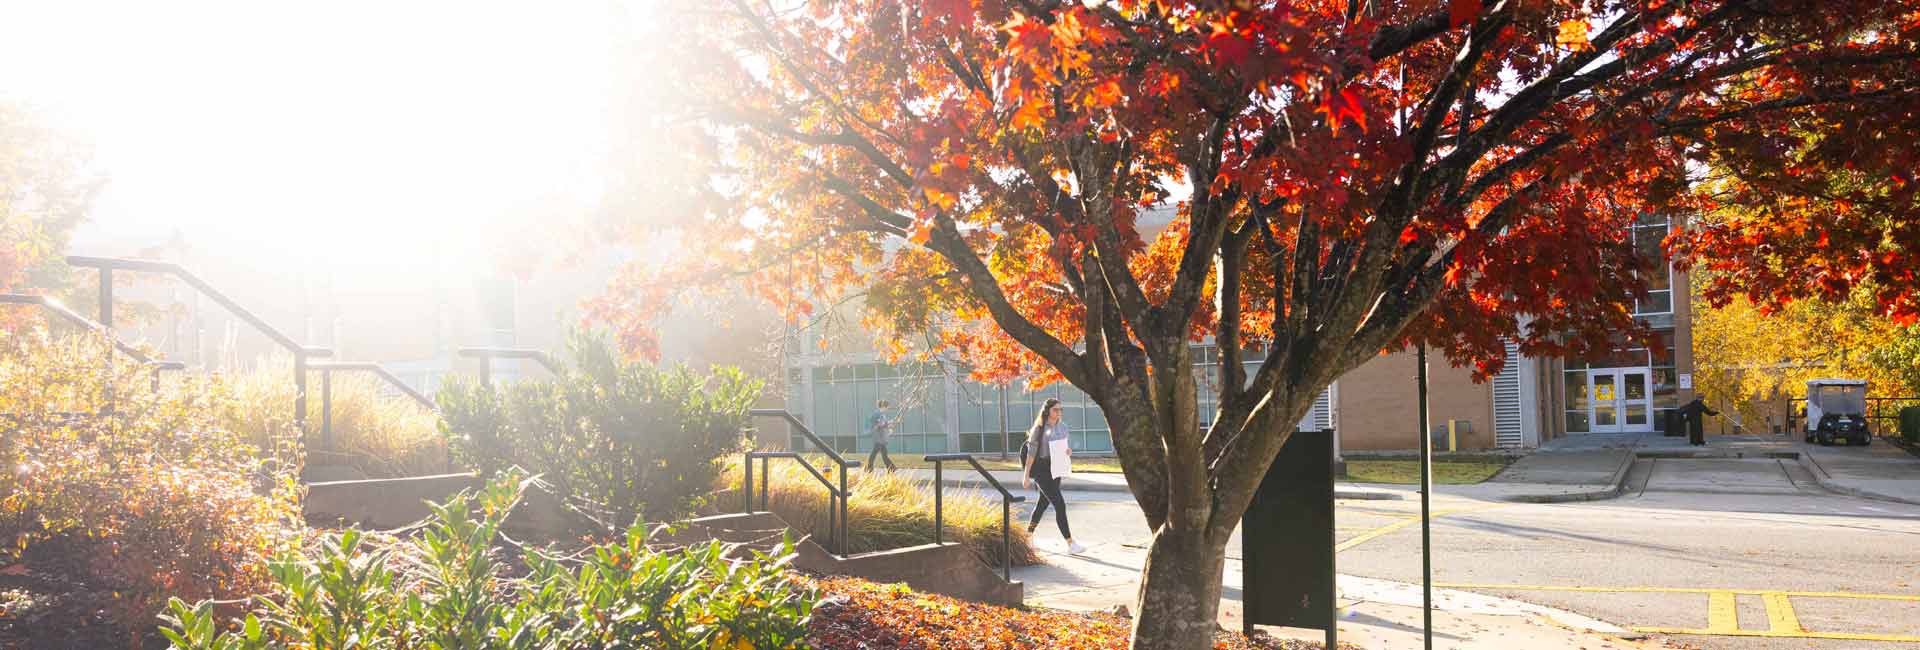 ksu student walking across campus during fall season